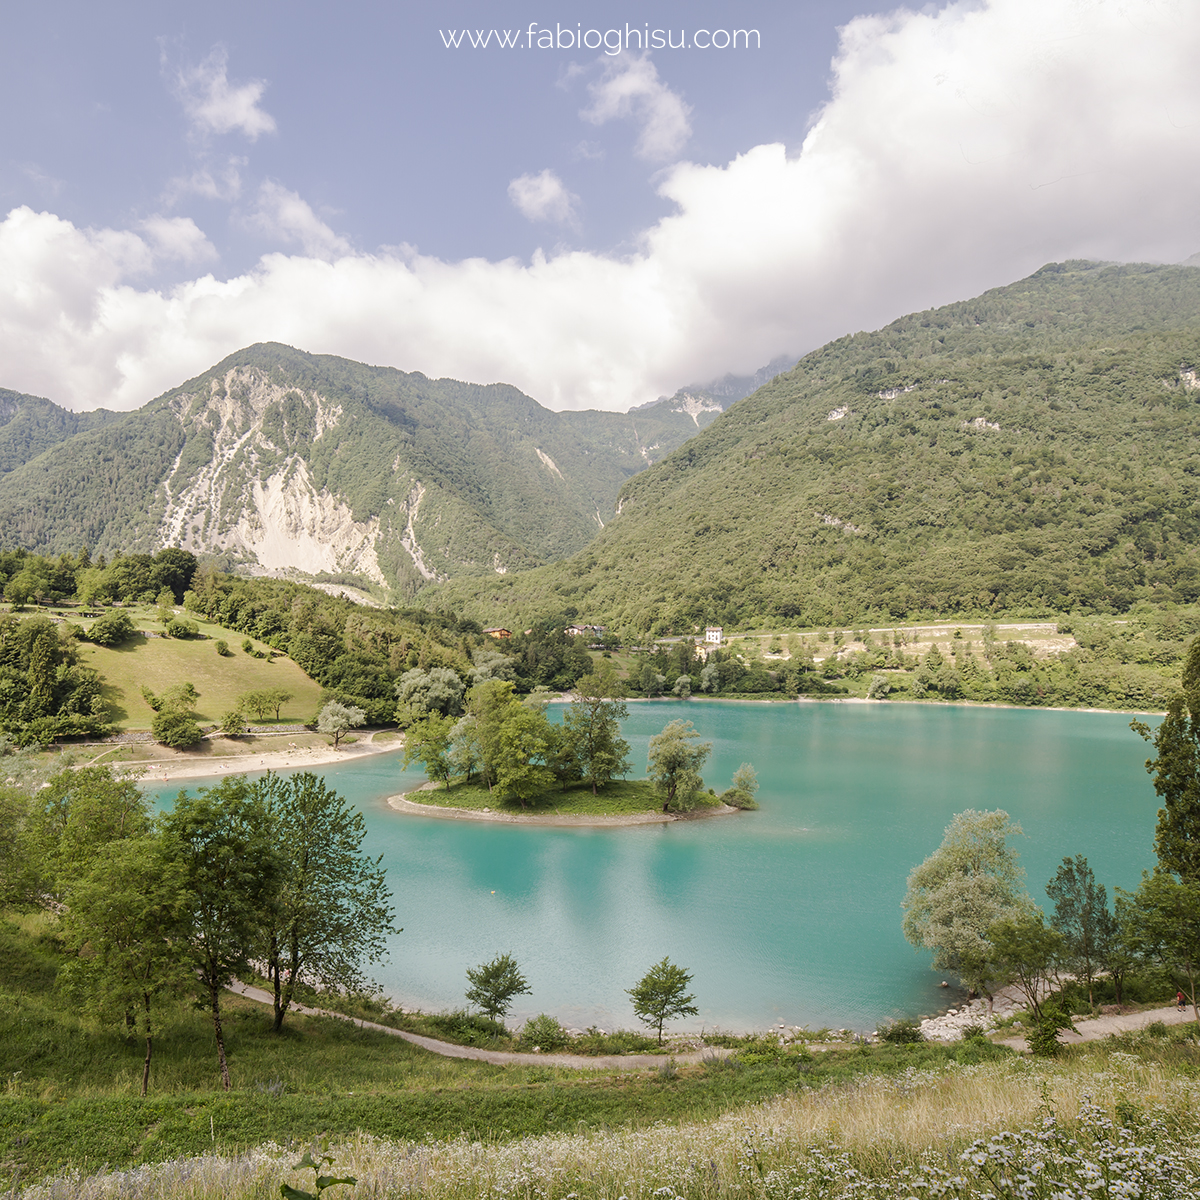 🚸 Summer in Trentino: trekking weeks